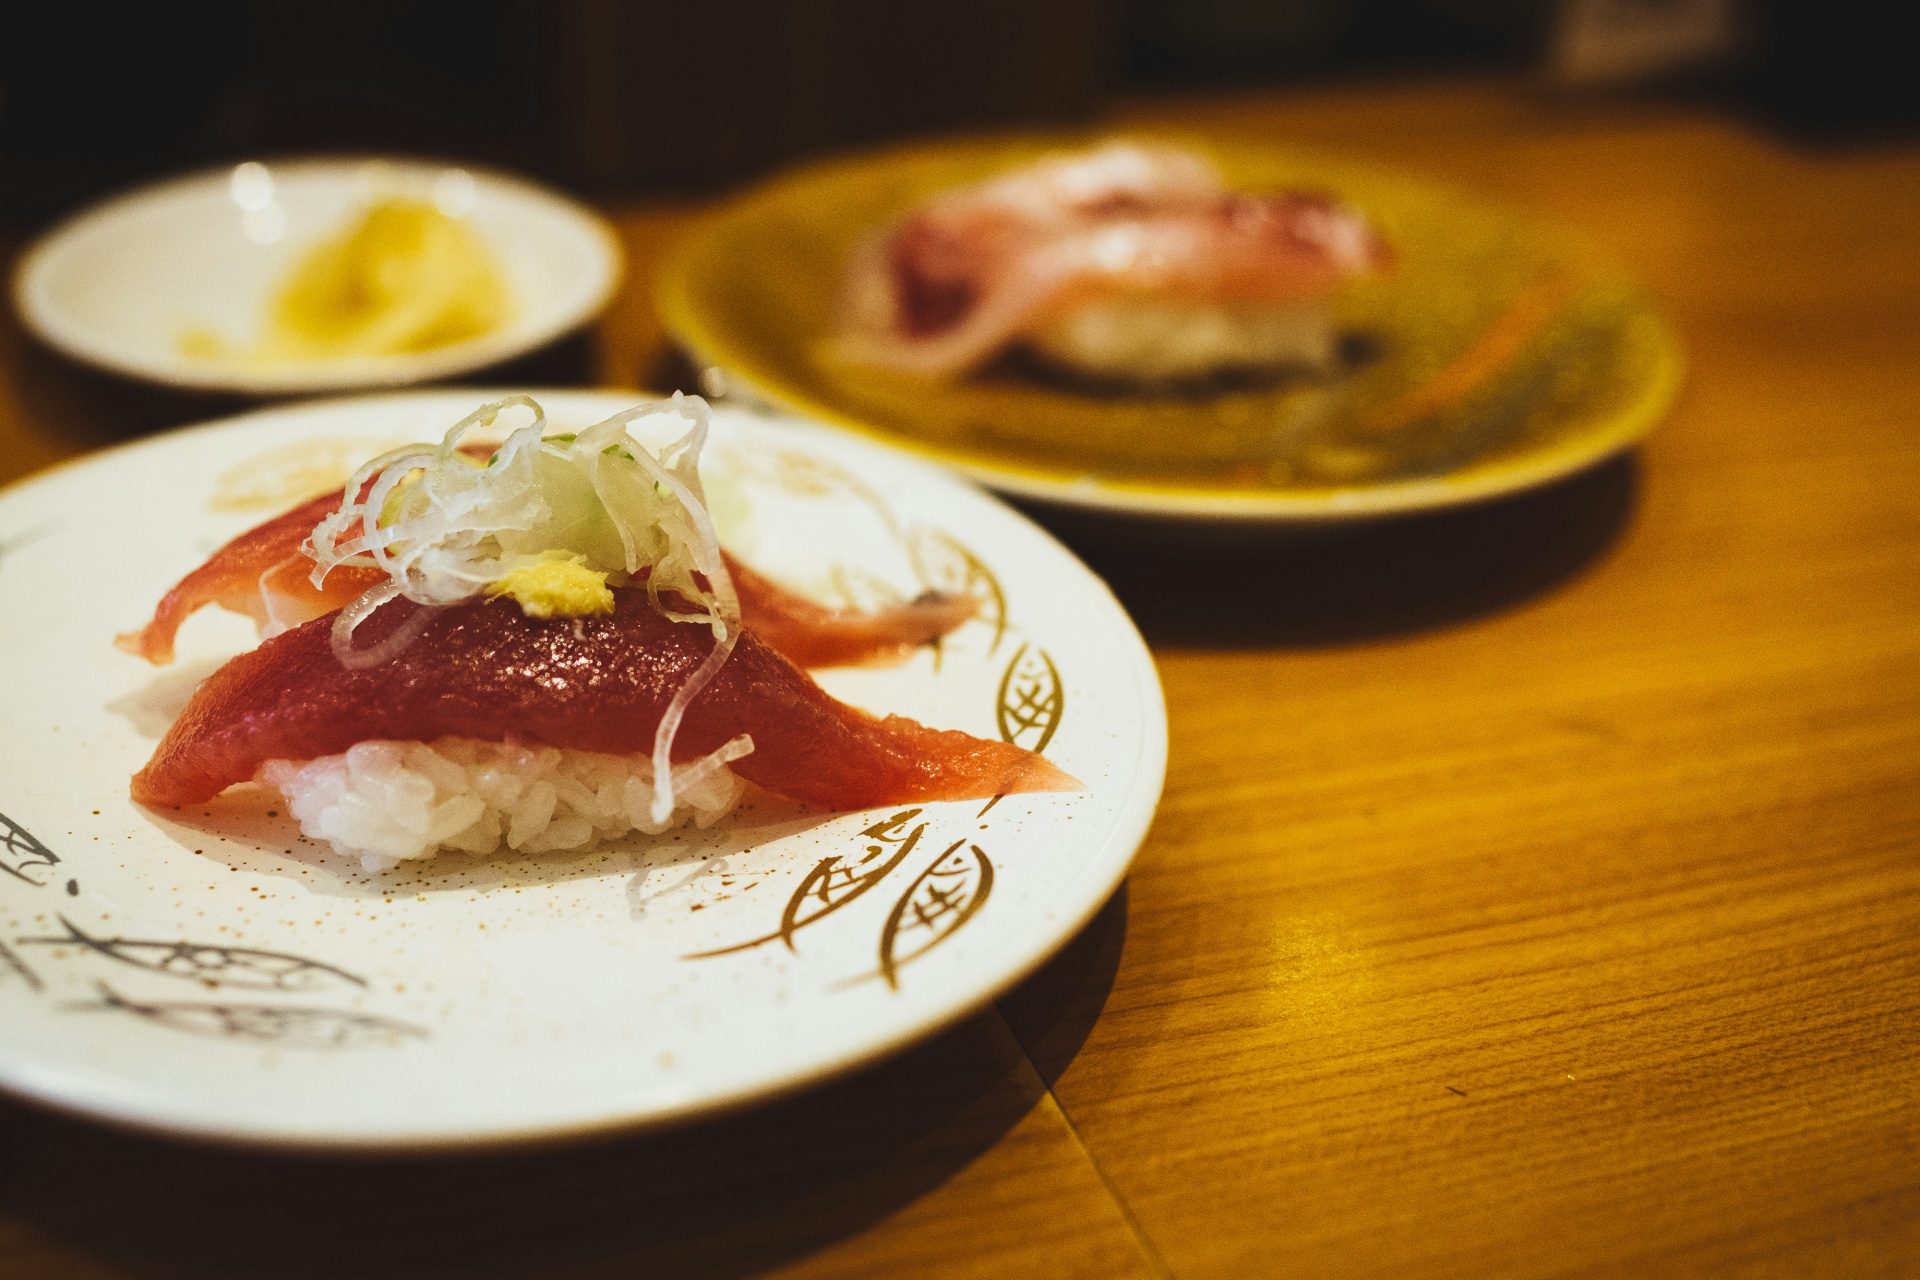 <p>The prefecture's residents love Bonito, not just seared tuna, and they boast the highest consumption of Bonito in Japan.</p> <p>Image: Masaaki Komori / Unsplash</p>